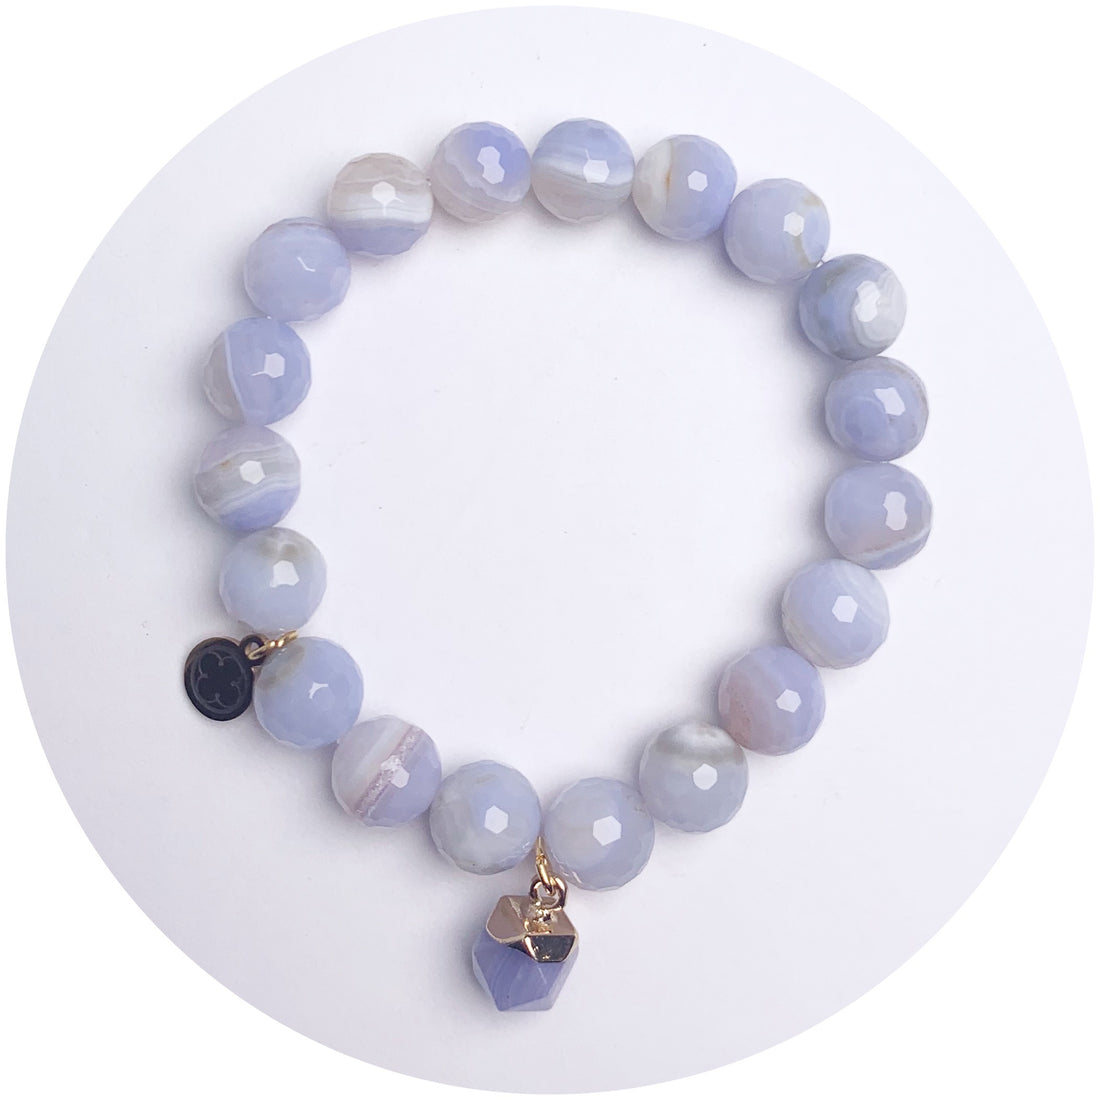 Moonshine Blue Jade with Perriwinkle Pendant